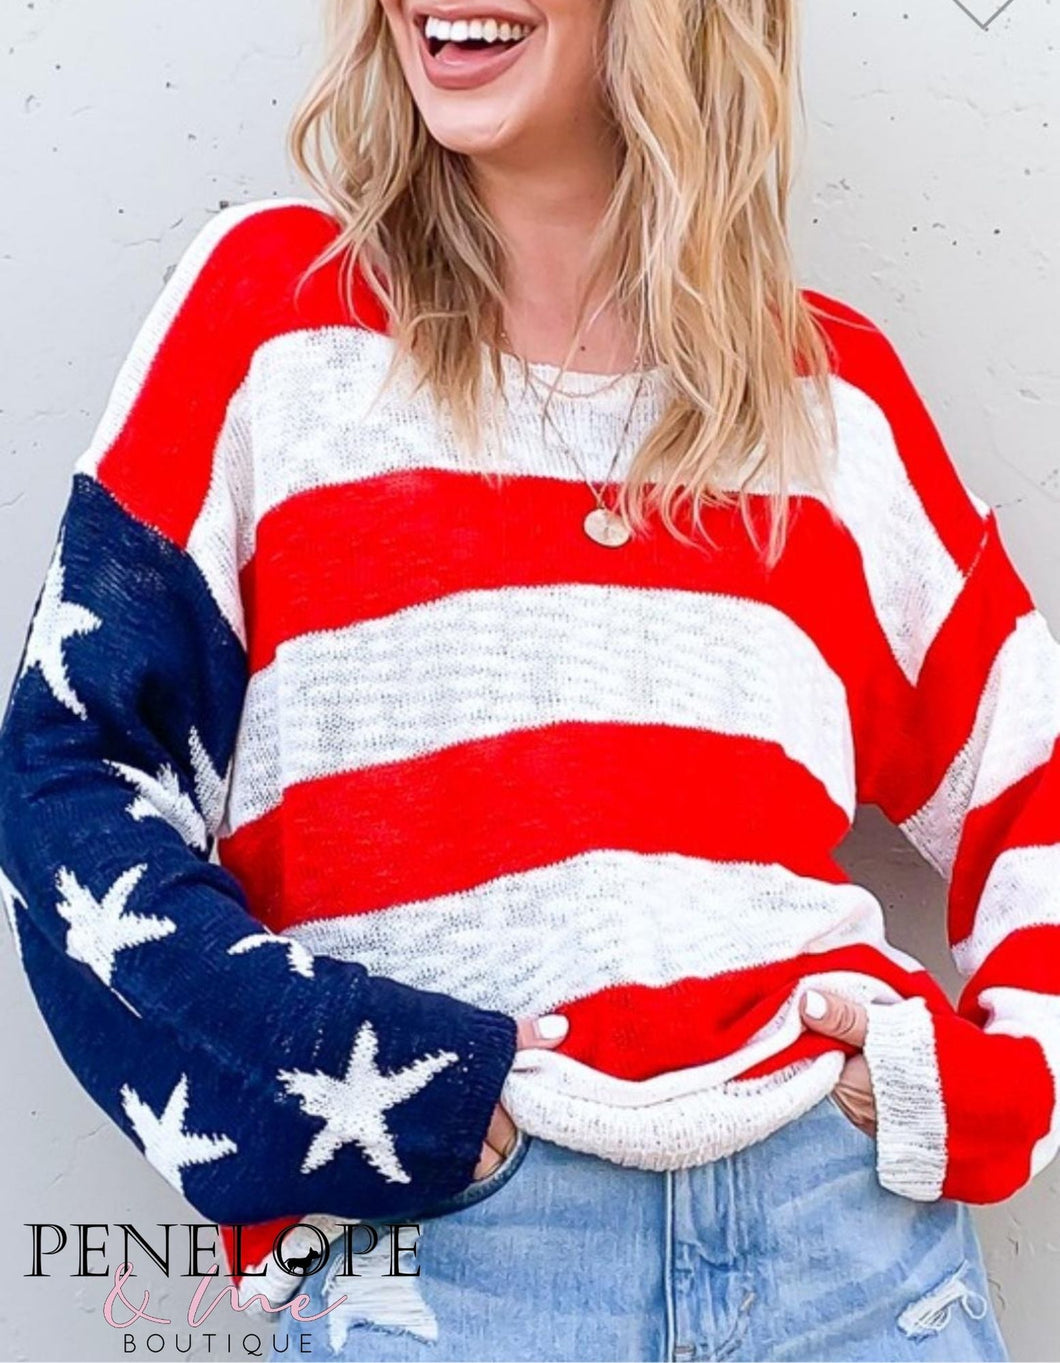 American Flag Long Sleeve Knit Top